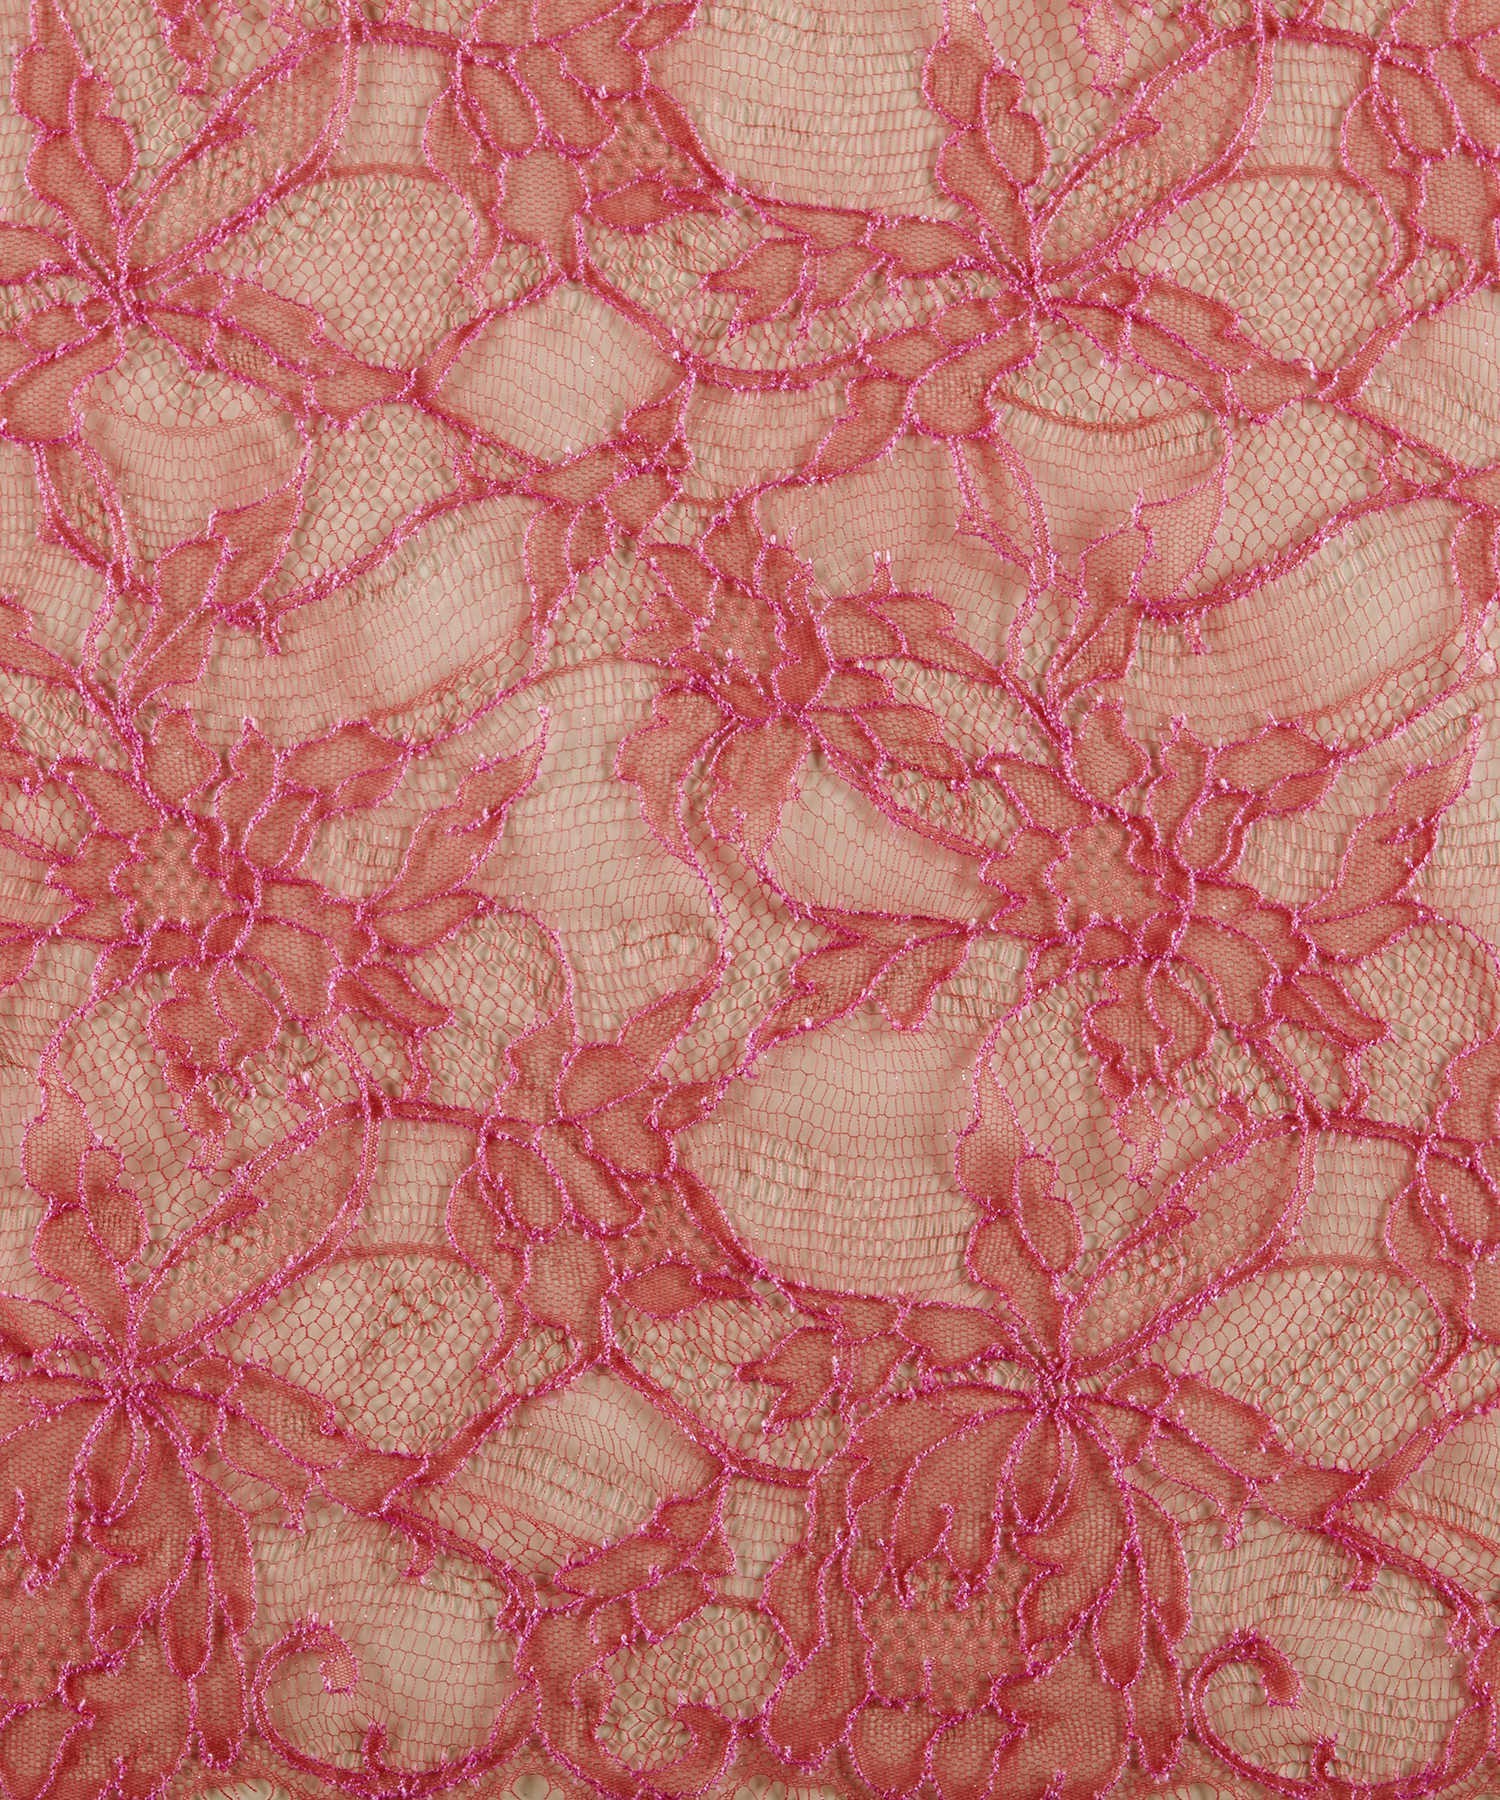 Coquette paillette 90 cm | Re-embroidered • Sophie Hallette